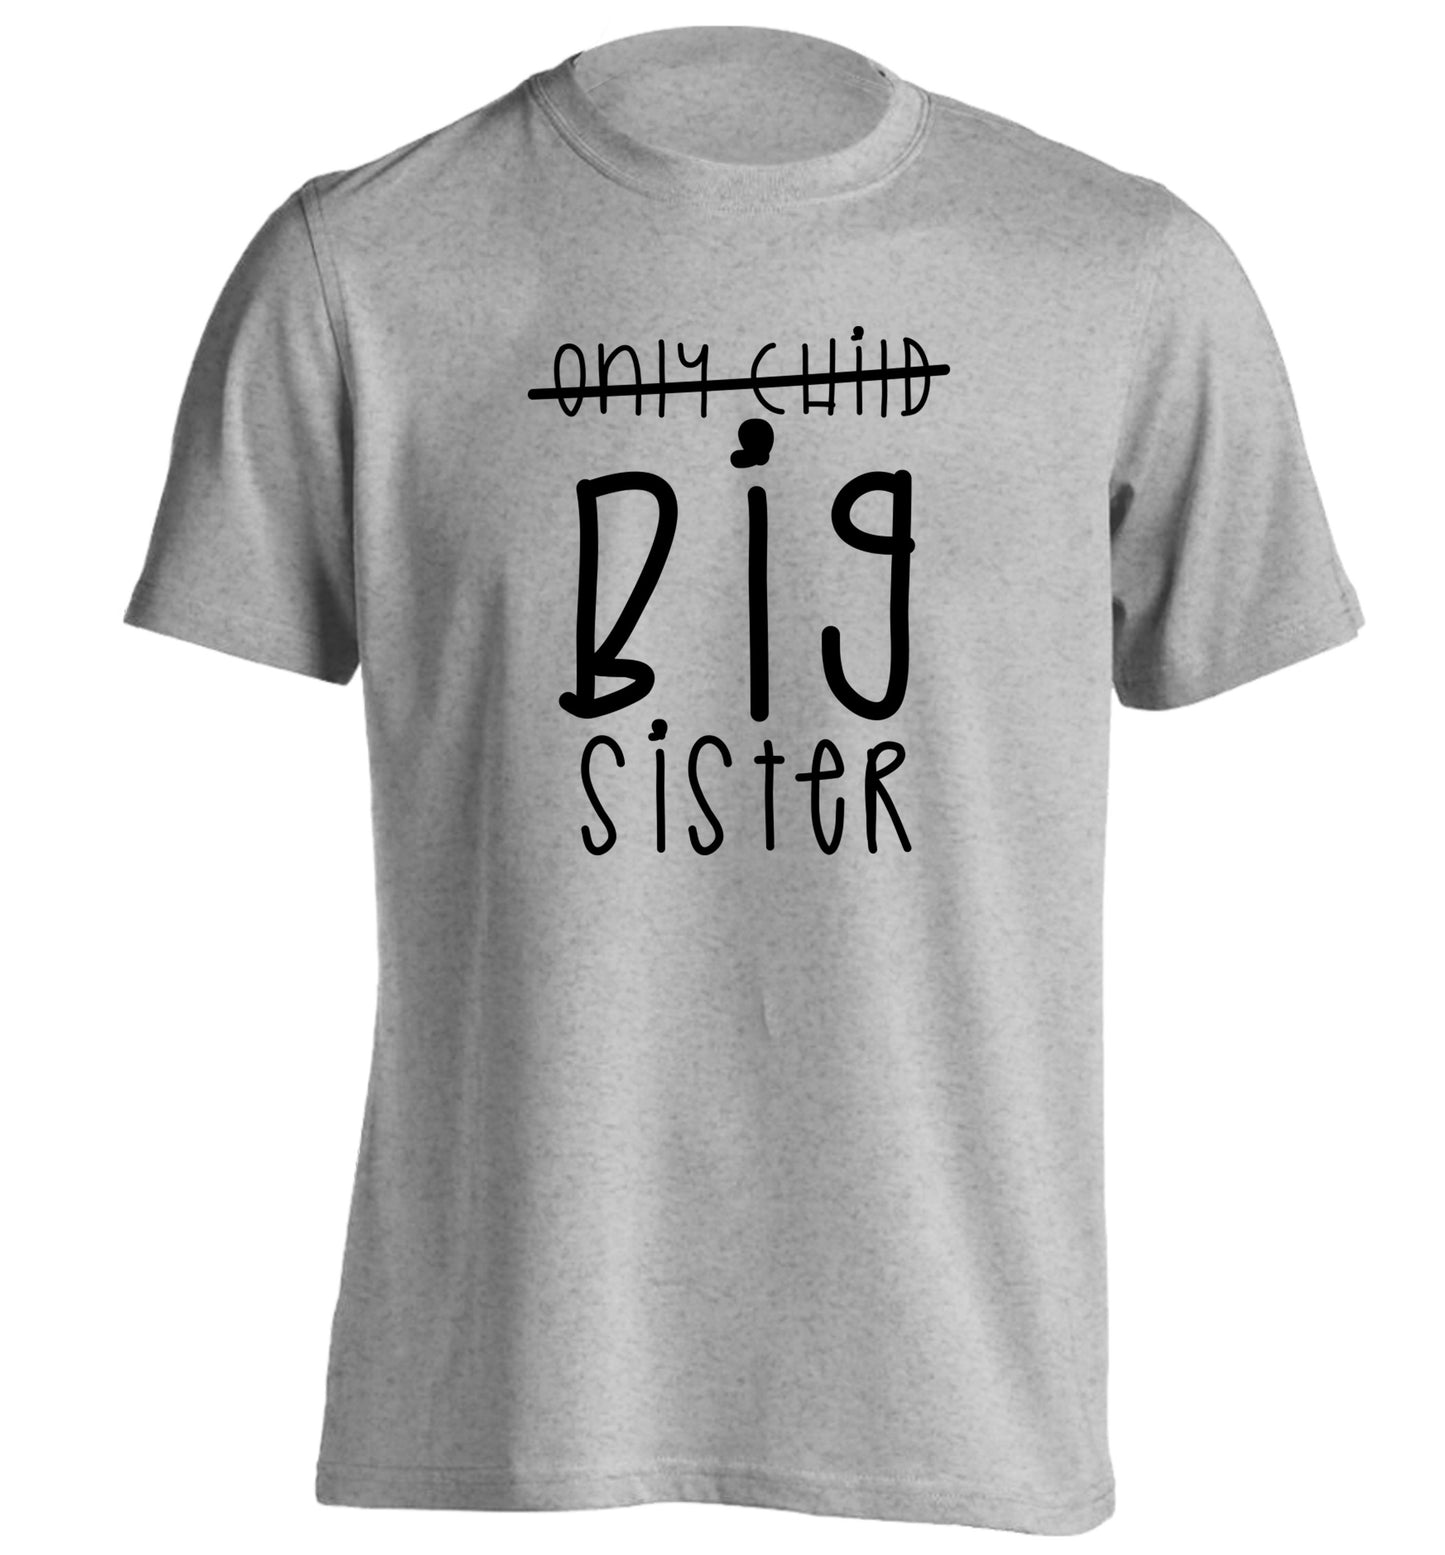 Only child big sister adults unisex grey Tshirt 2XL